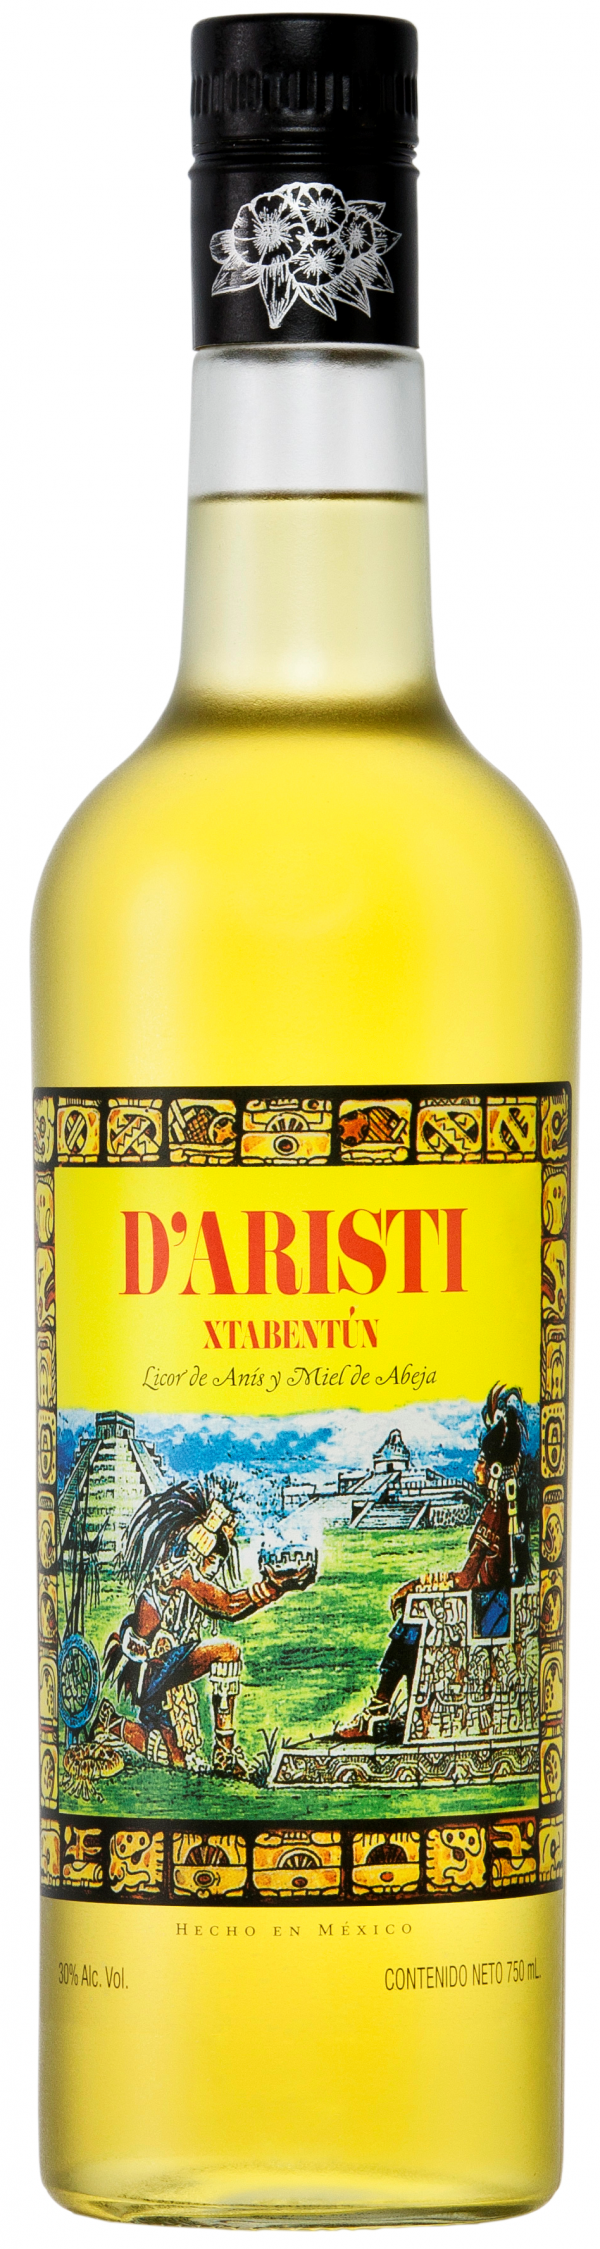 Zoom to enlarge the D`aristi Xtabentun Honey Liqueur